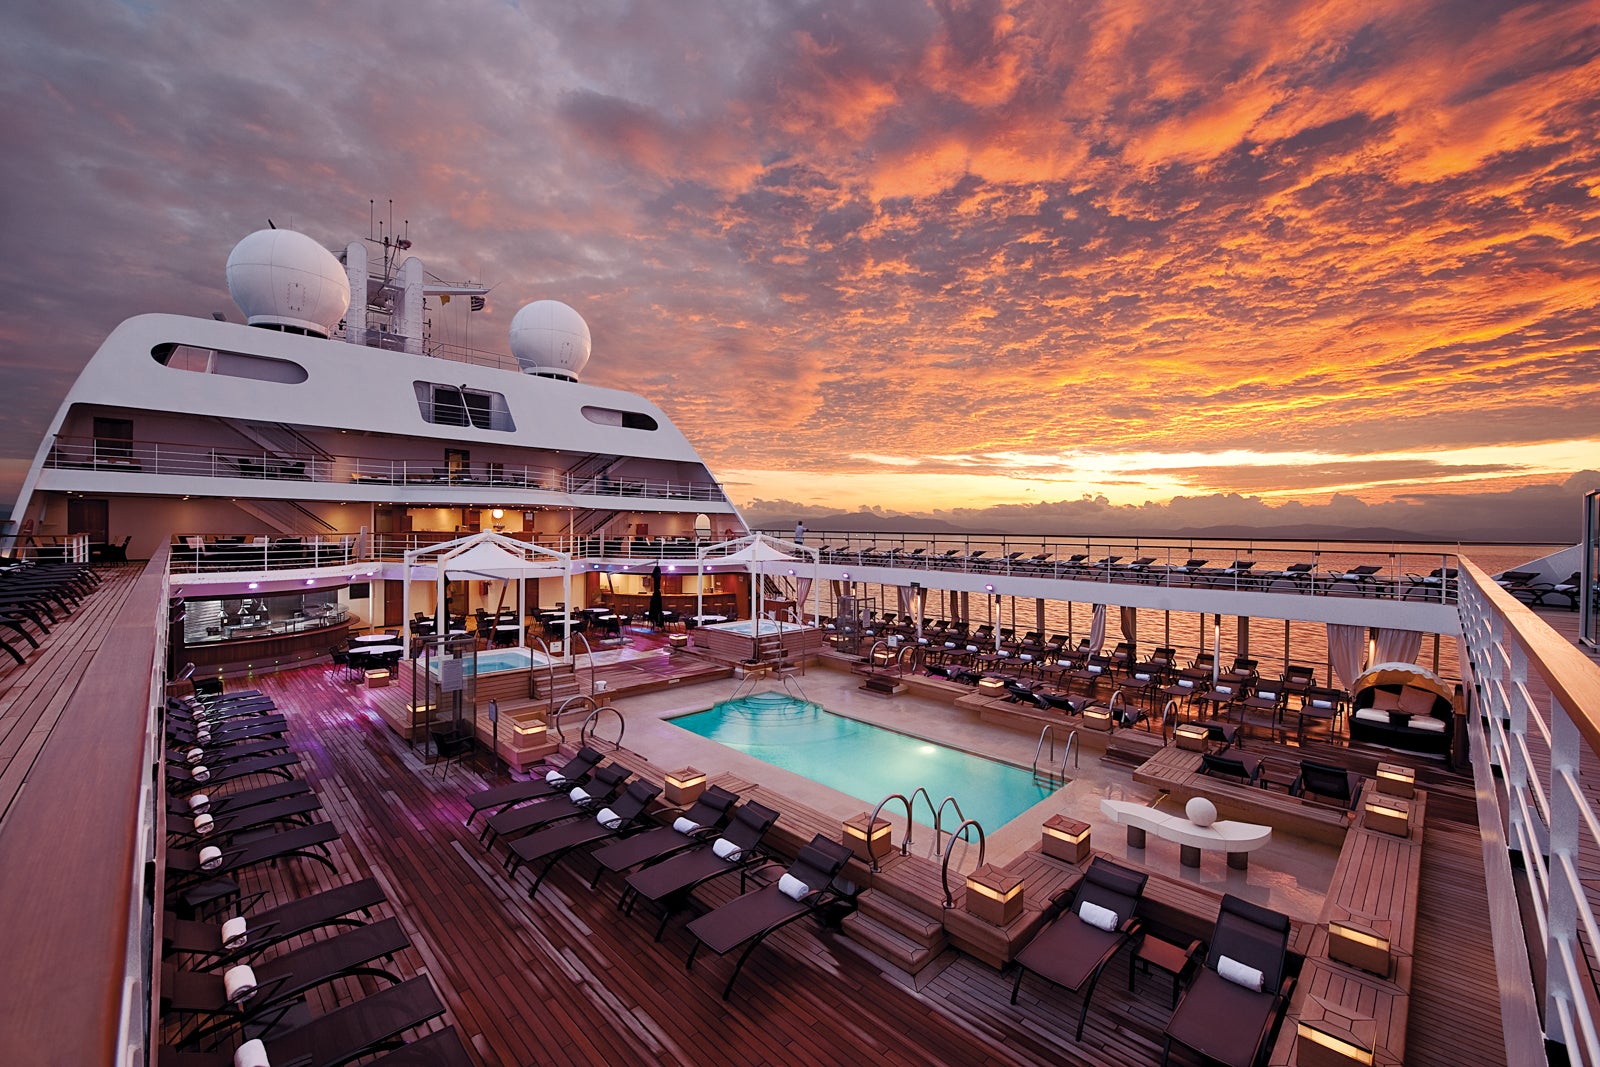 Pool deck of Seabourn cruise ship